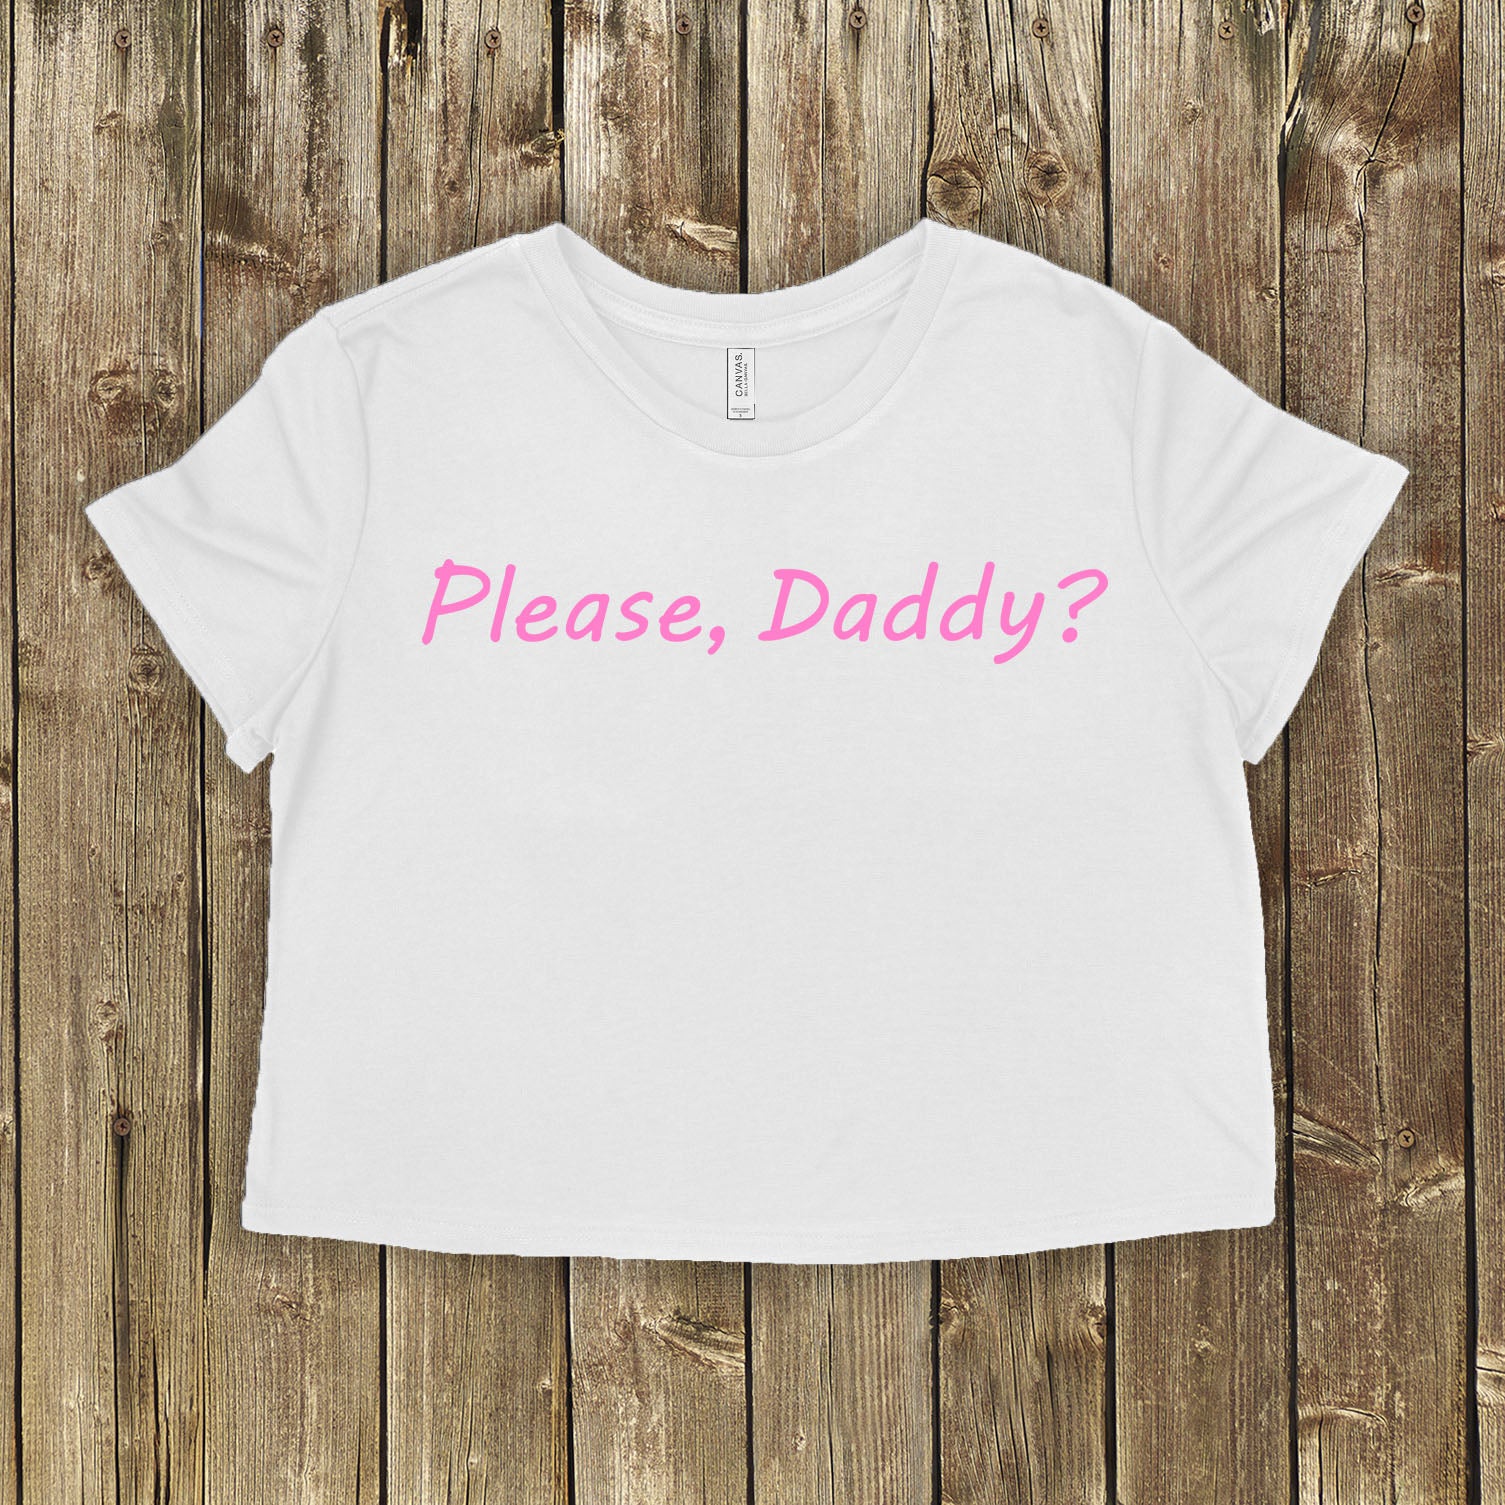 Please, Daddy? Women's Crop Top